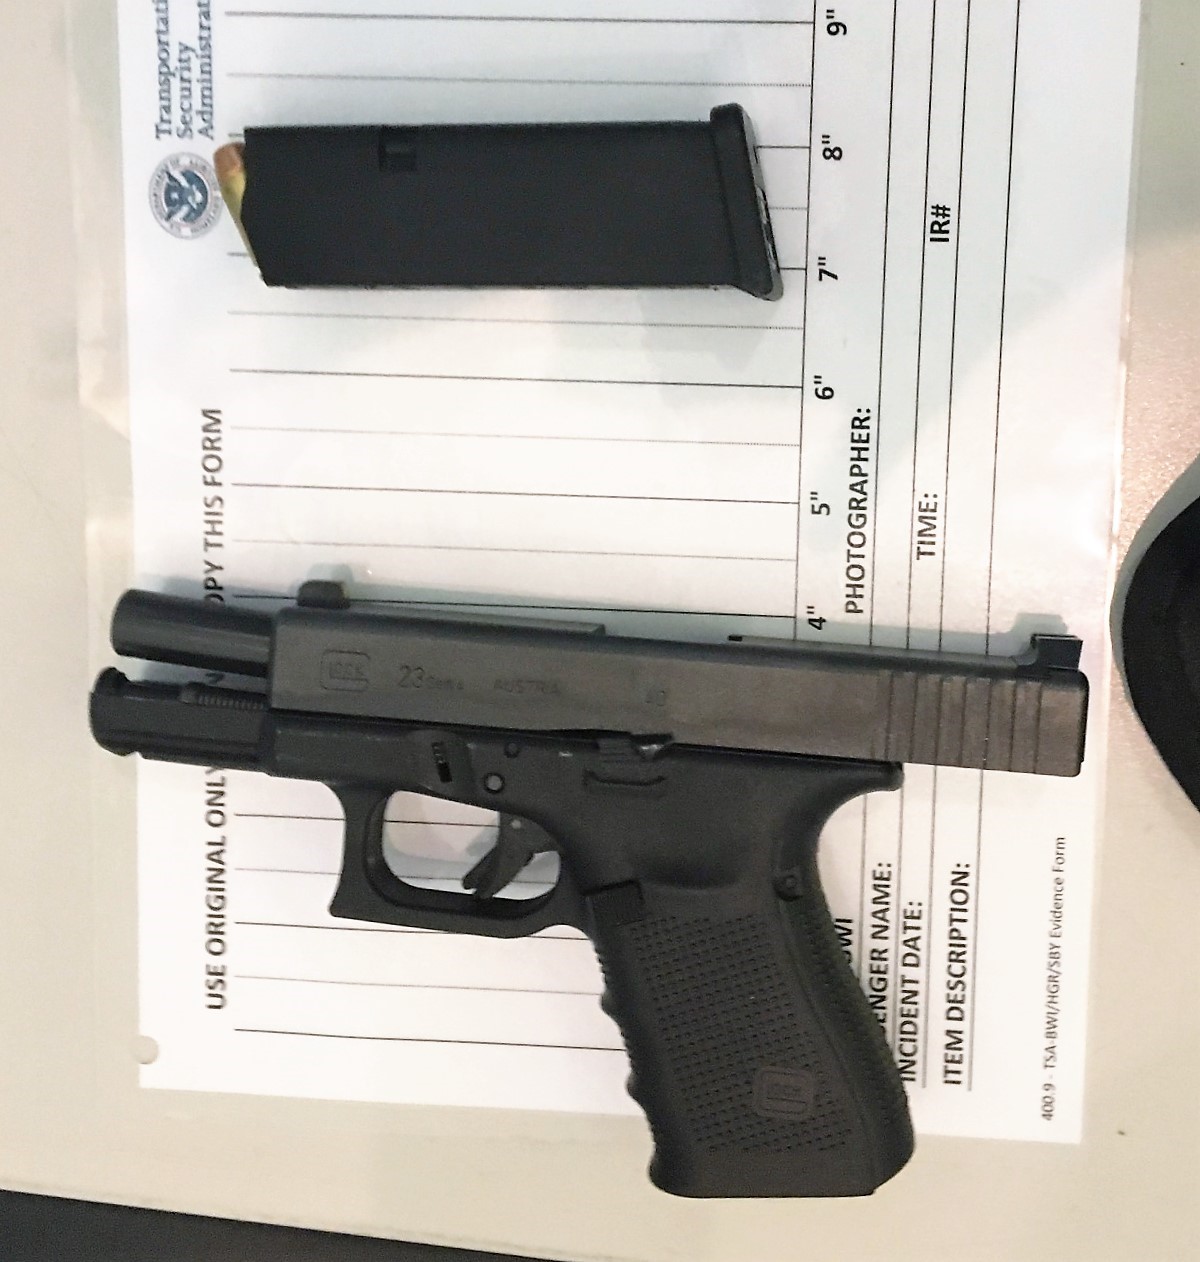 Handgun discovered by TSA at BWI Airport